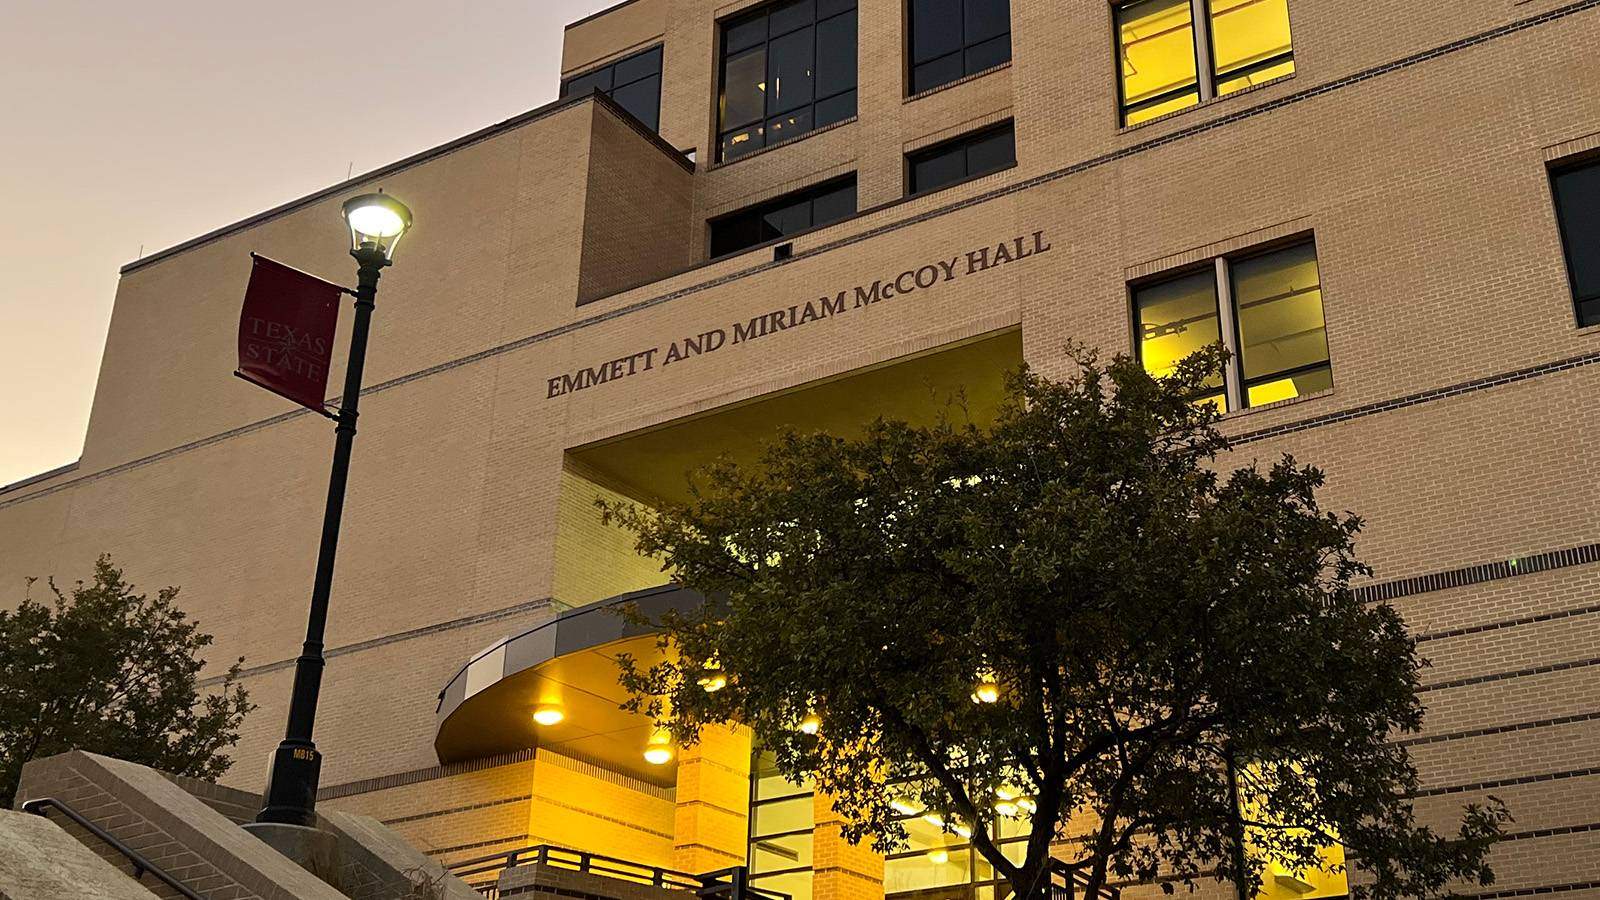 Main entrance to McCoy Hall at Texas State University at dusk